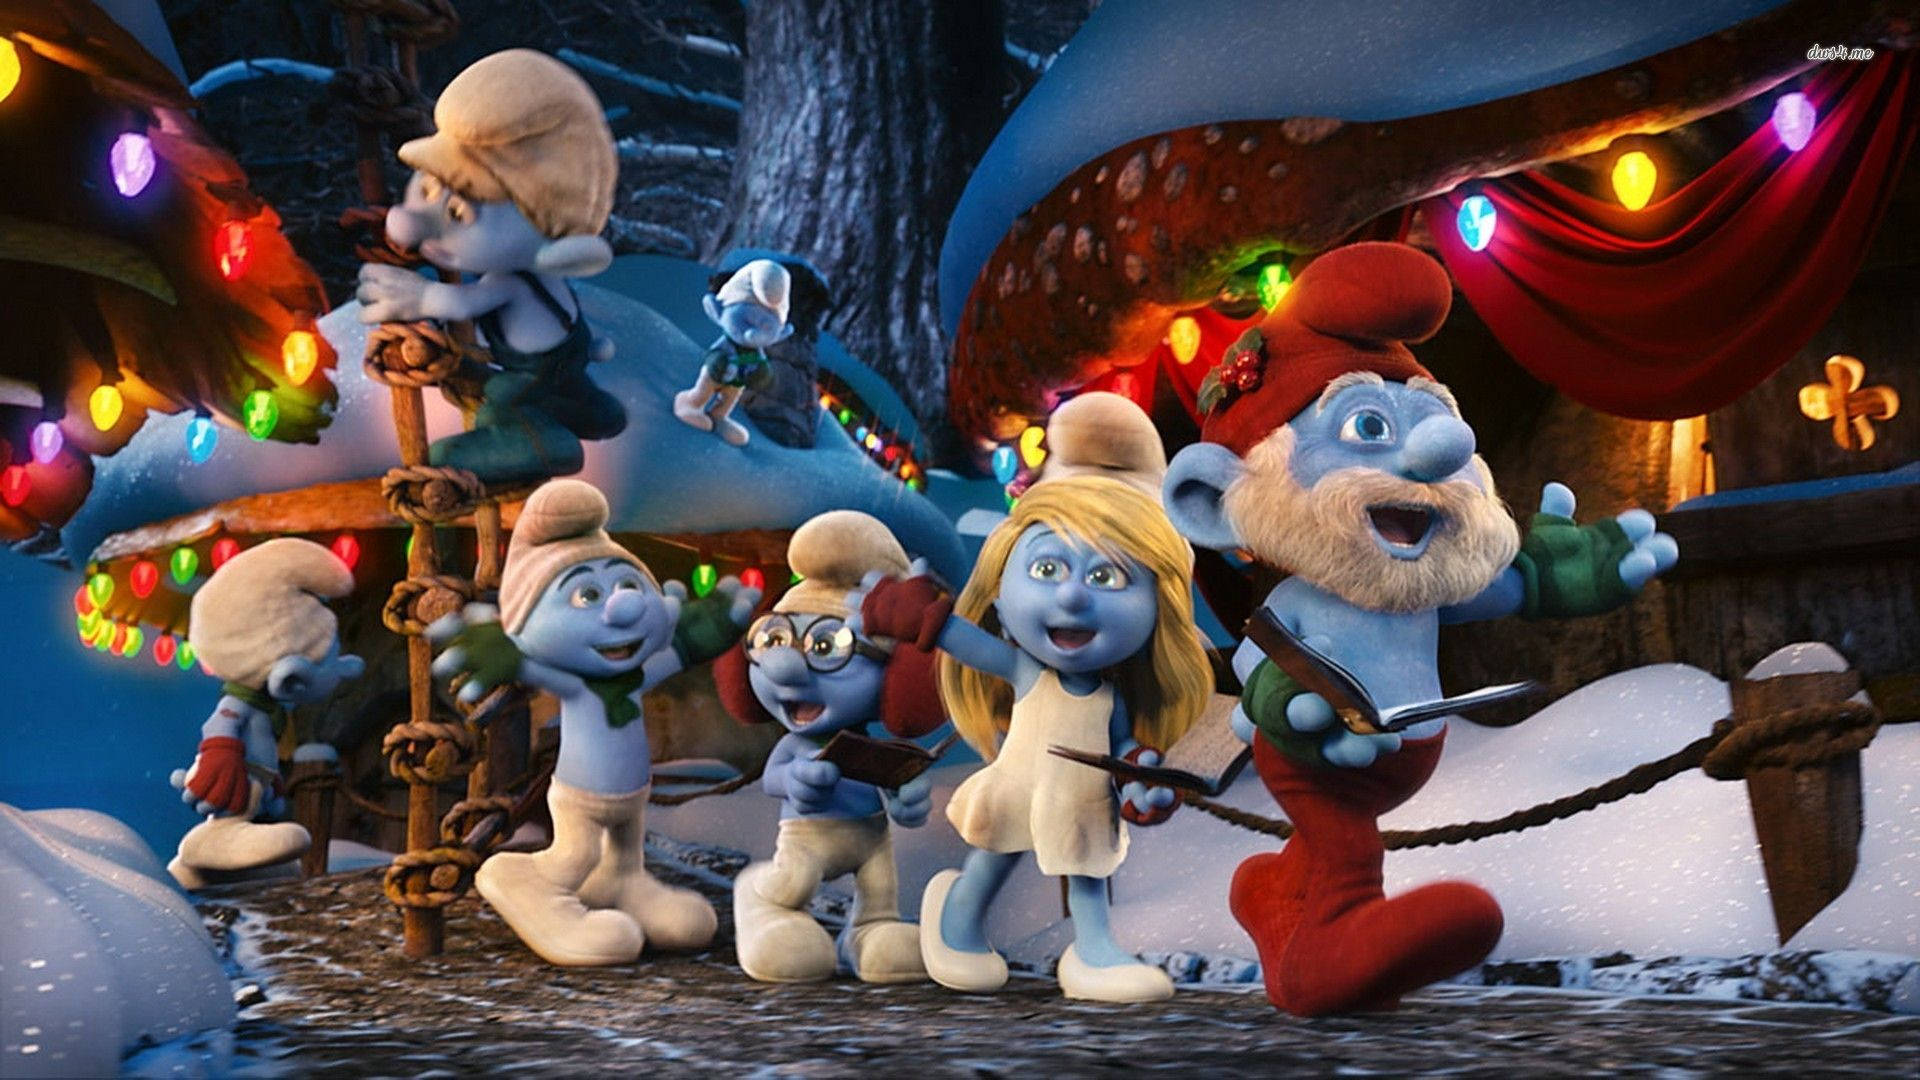 The Smurfs A Christmas Carol Background